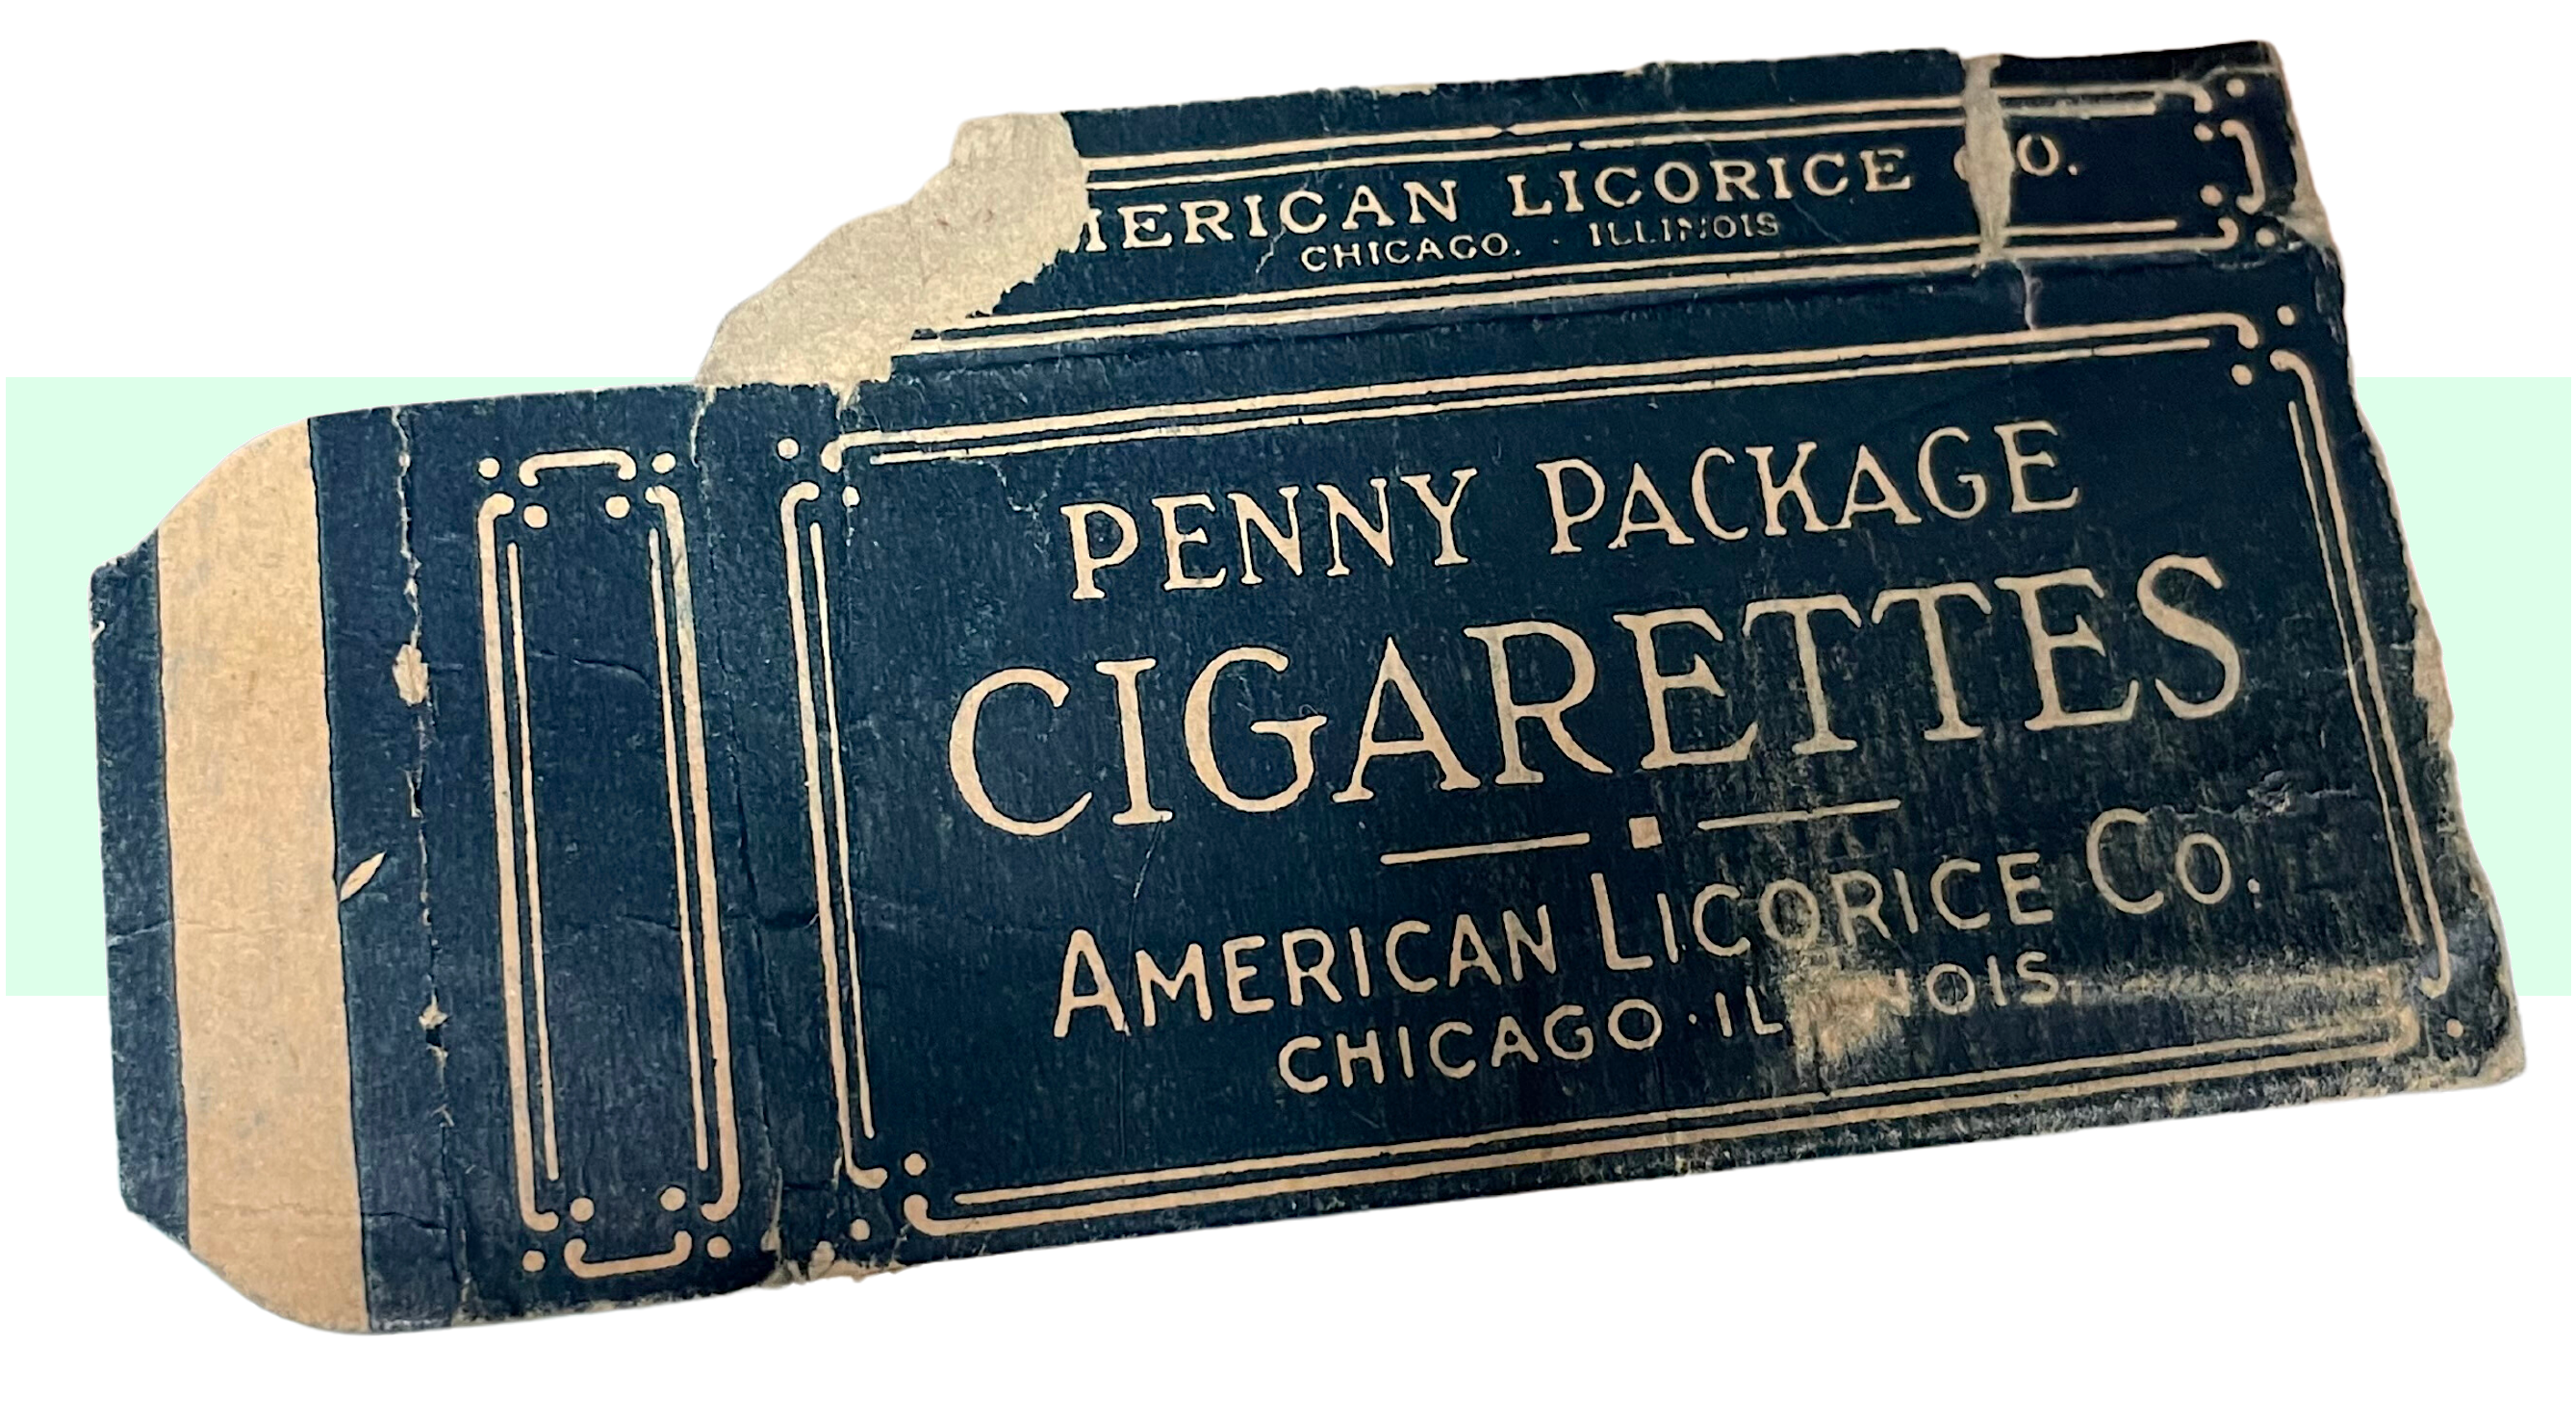 American Licorice Co., est. 1914